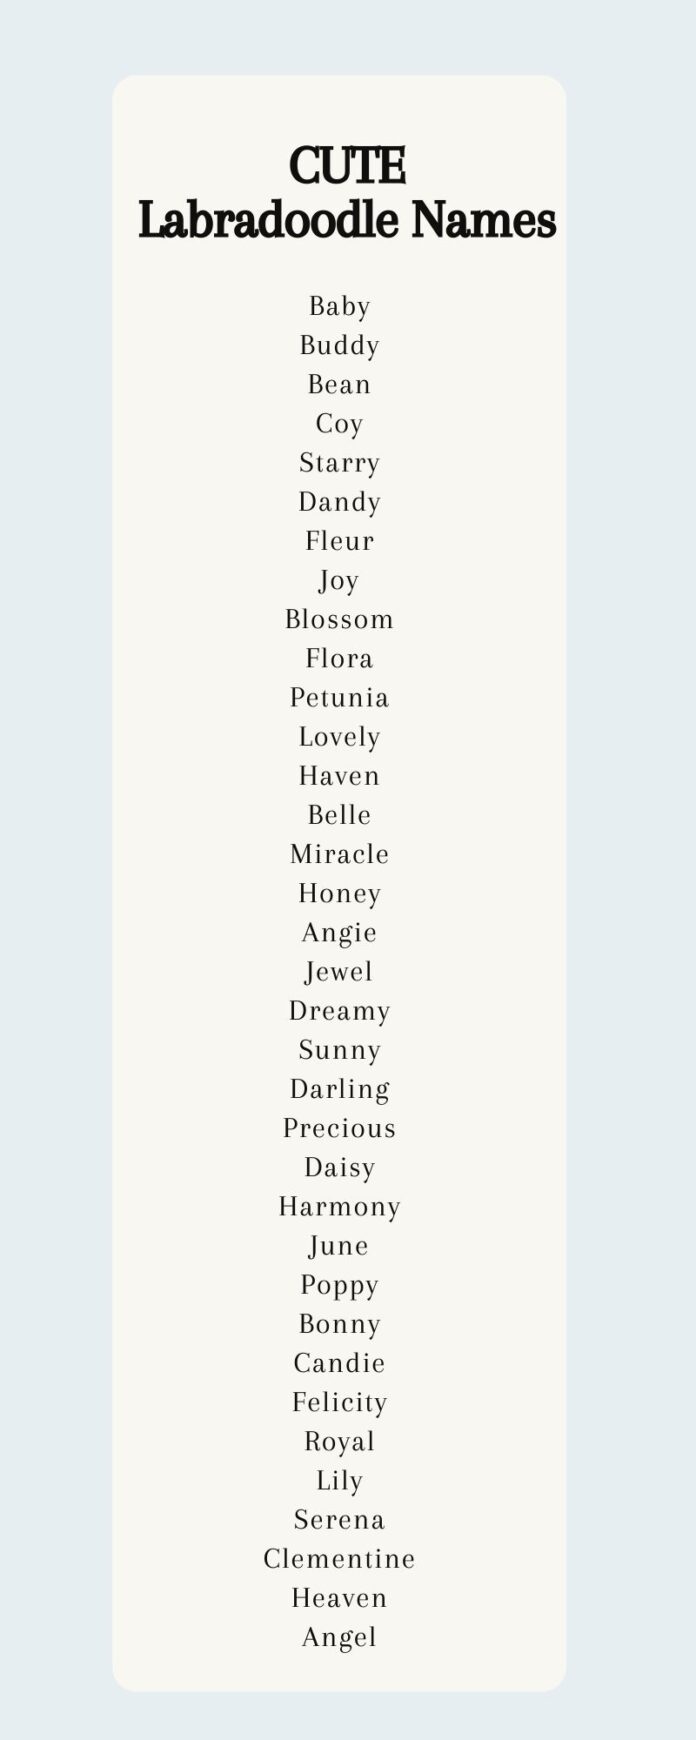 Labradoodle Names – 250 Adorable Ideas For Naming Your Puppy